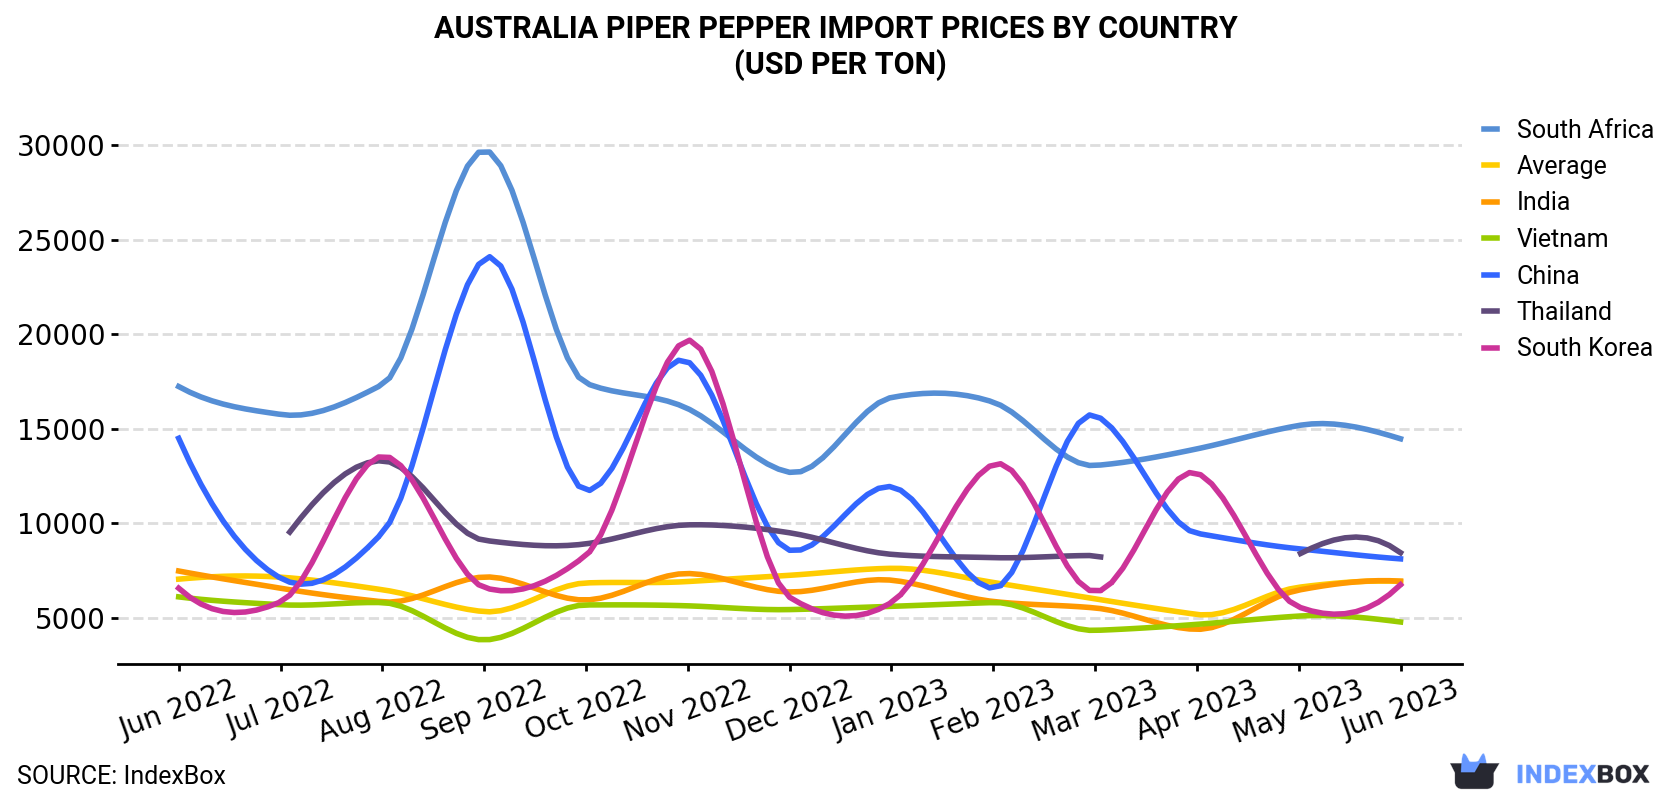 Australia Piper Pepper Import Prices By Country (USD Per Ton)